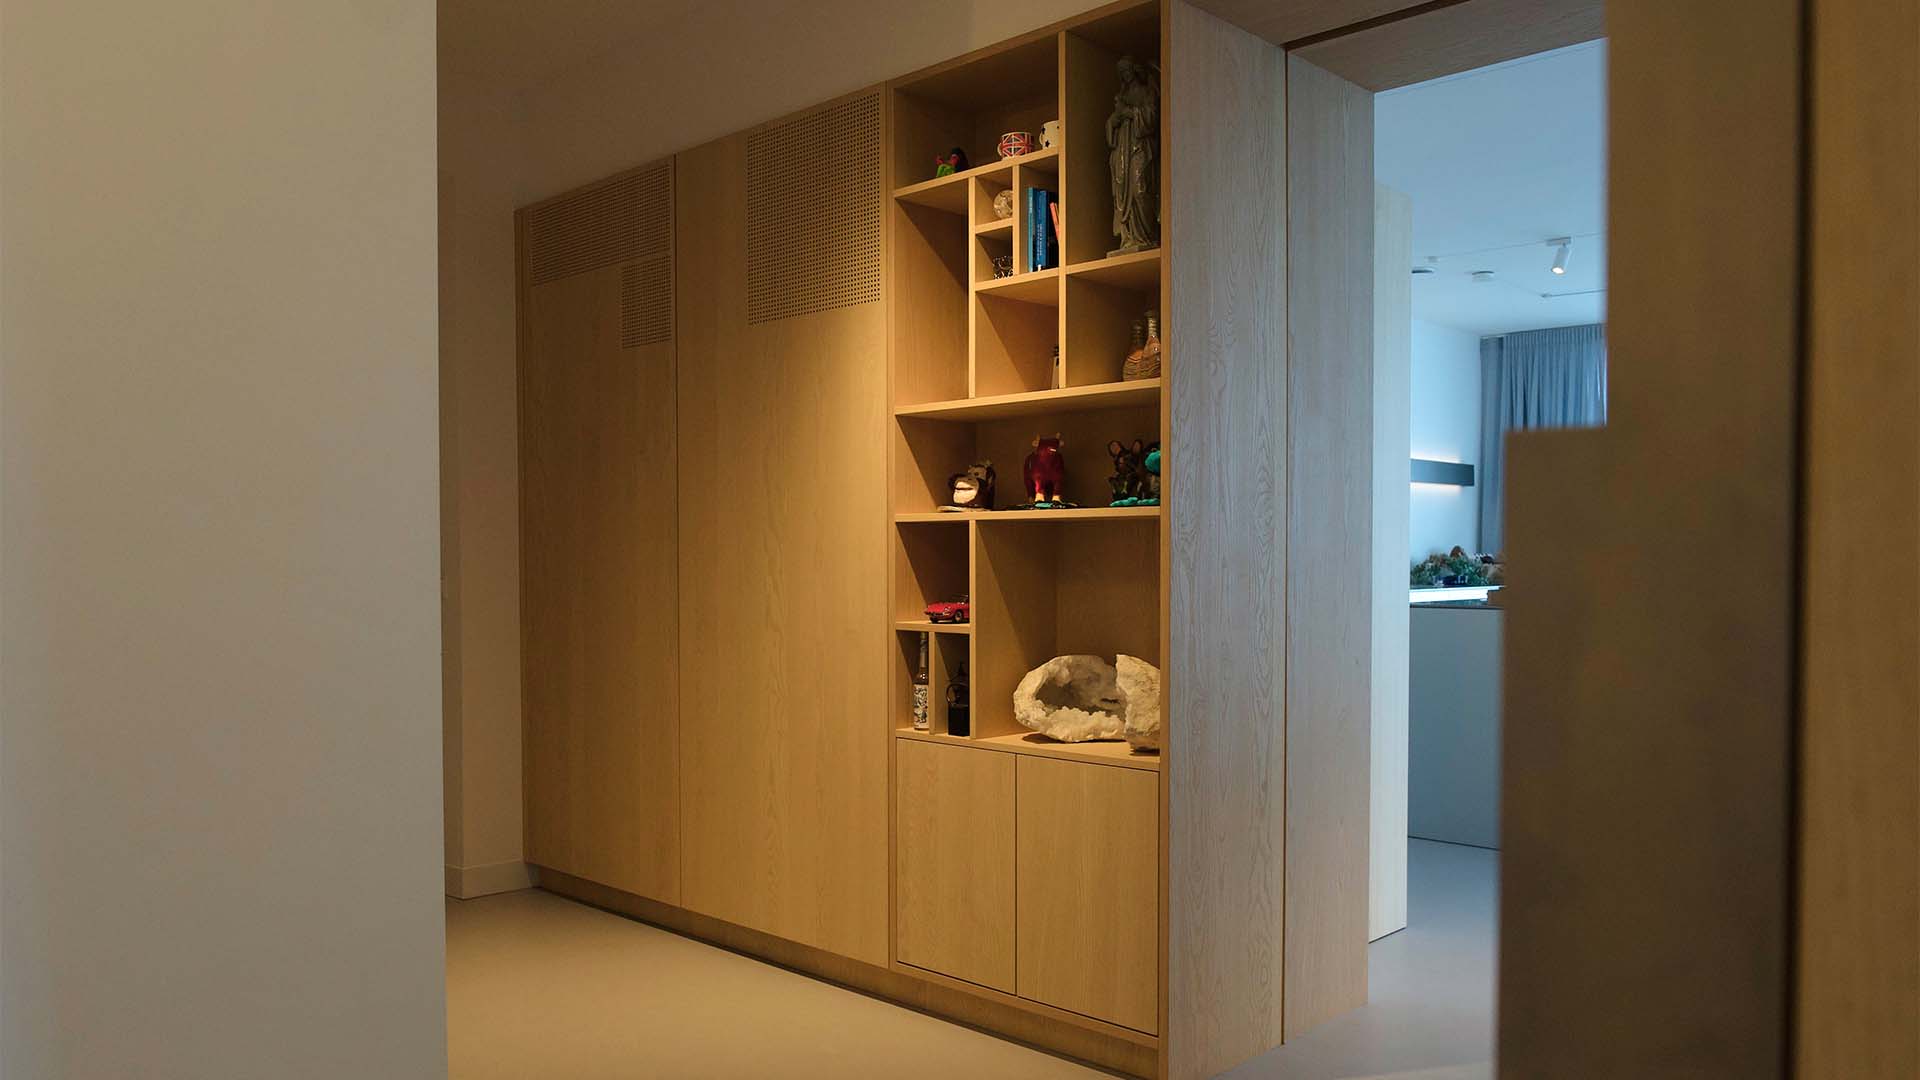 Maaskant meubel- en interieurbouw - projecten - wonen - Zalmhaventoren - Rotterdam - appartement - kastenwand